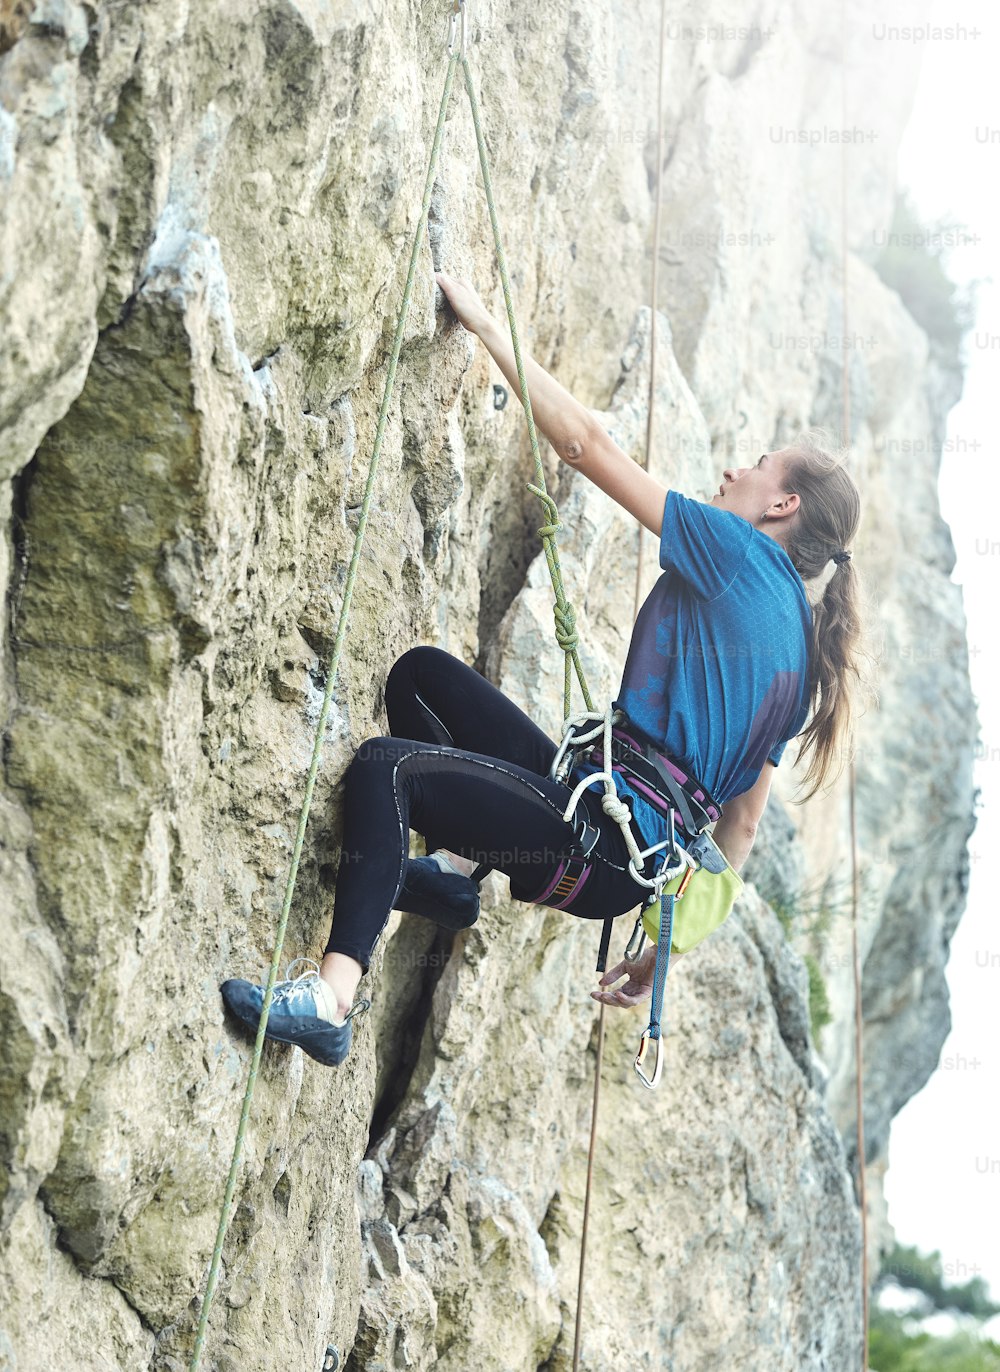 Erwachsene Frau Klettererin. Kletterer klettert auf eine Felswand. Frau macht harte Bewegung